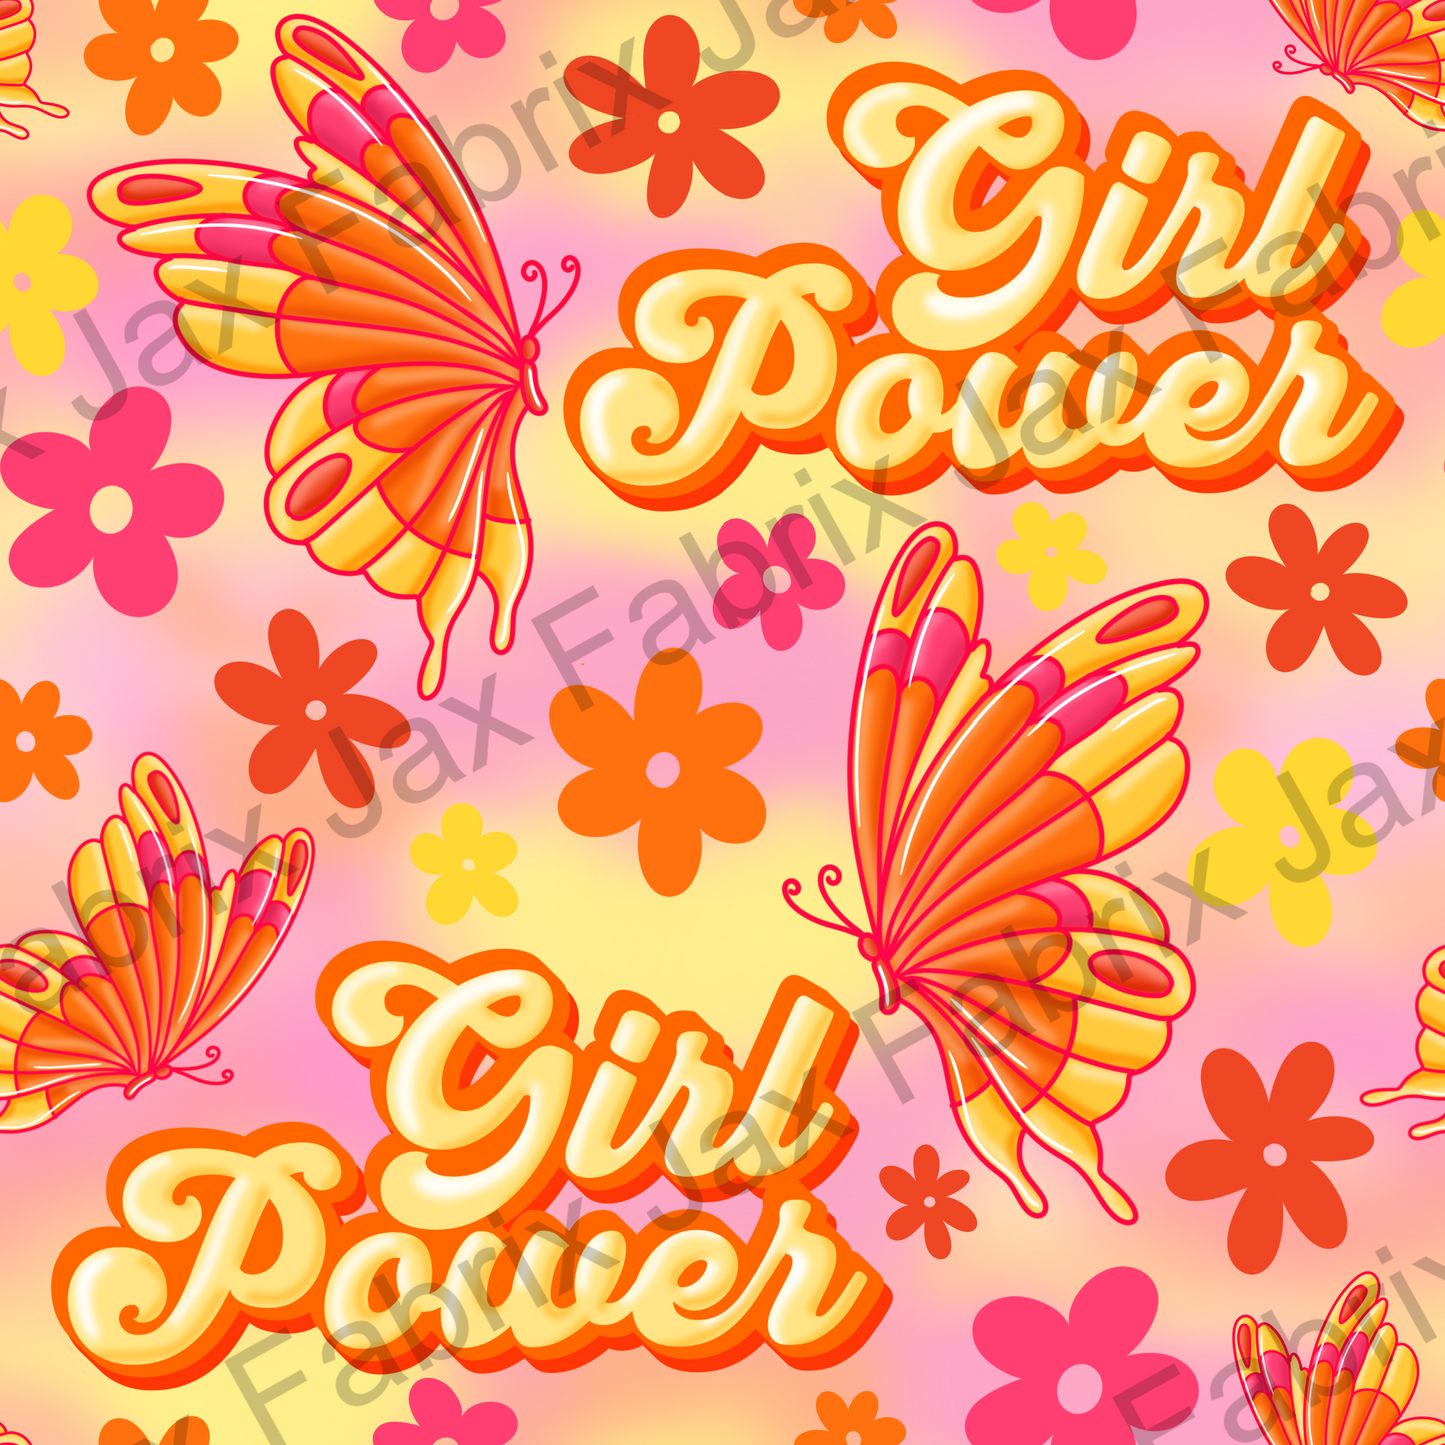 Groovy Sunset Girl Power ZR147